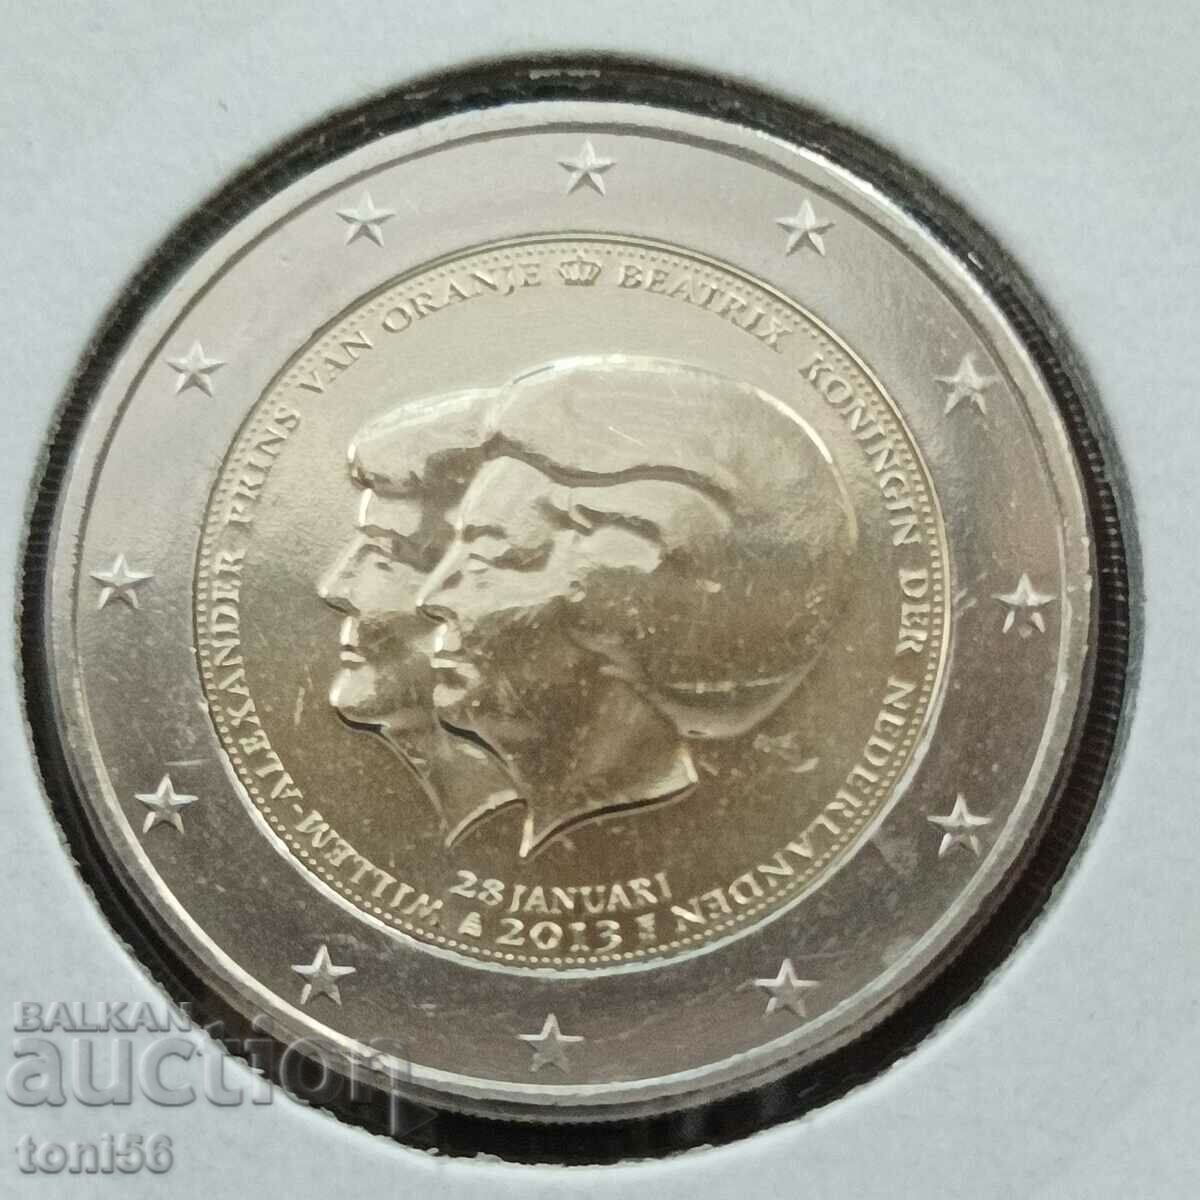 Olanda 2 euro 2013 - Prințul Willem-Alexander